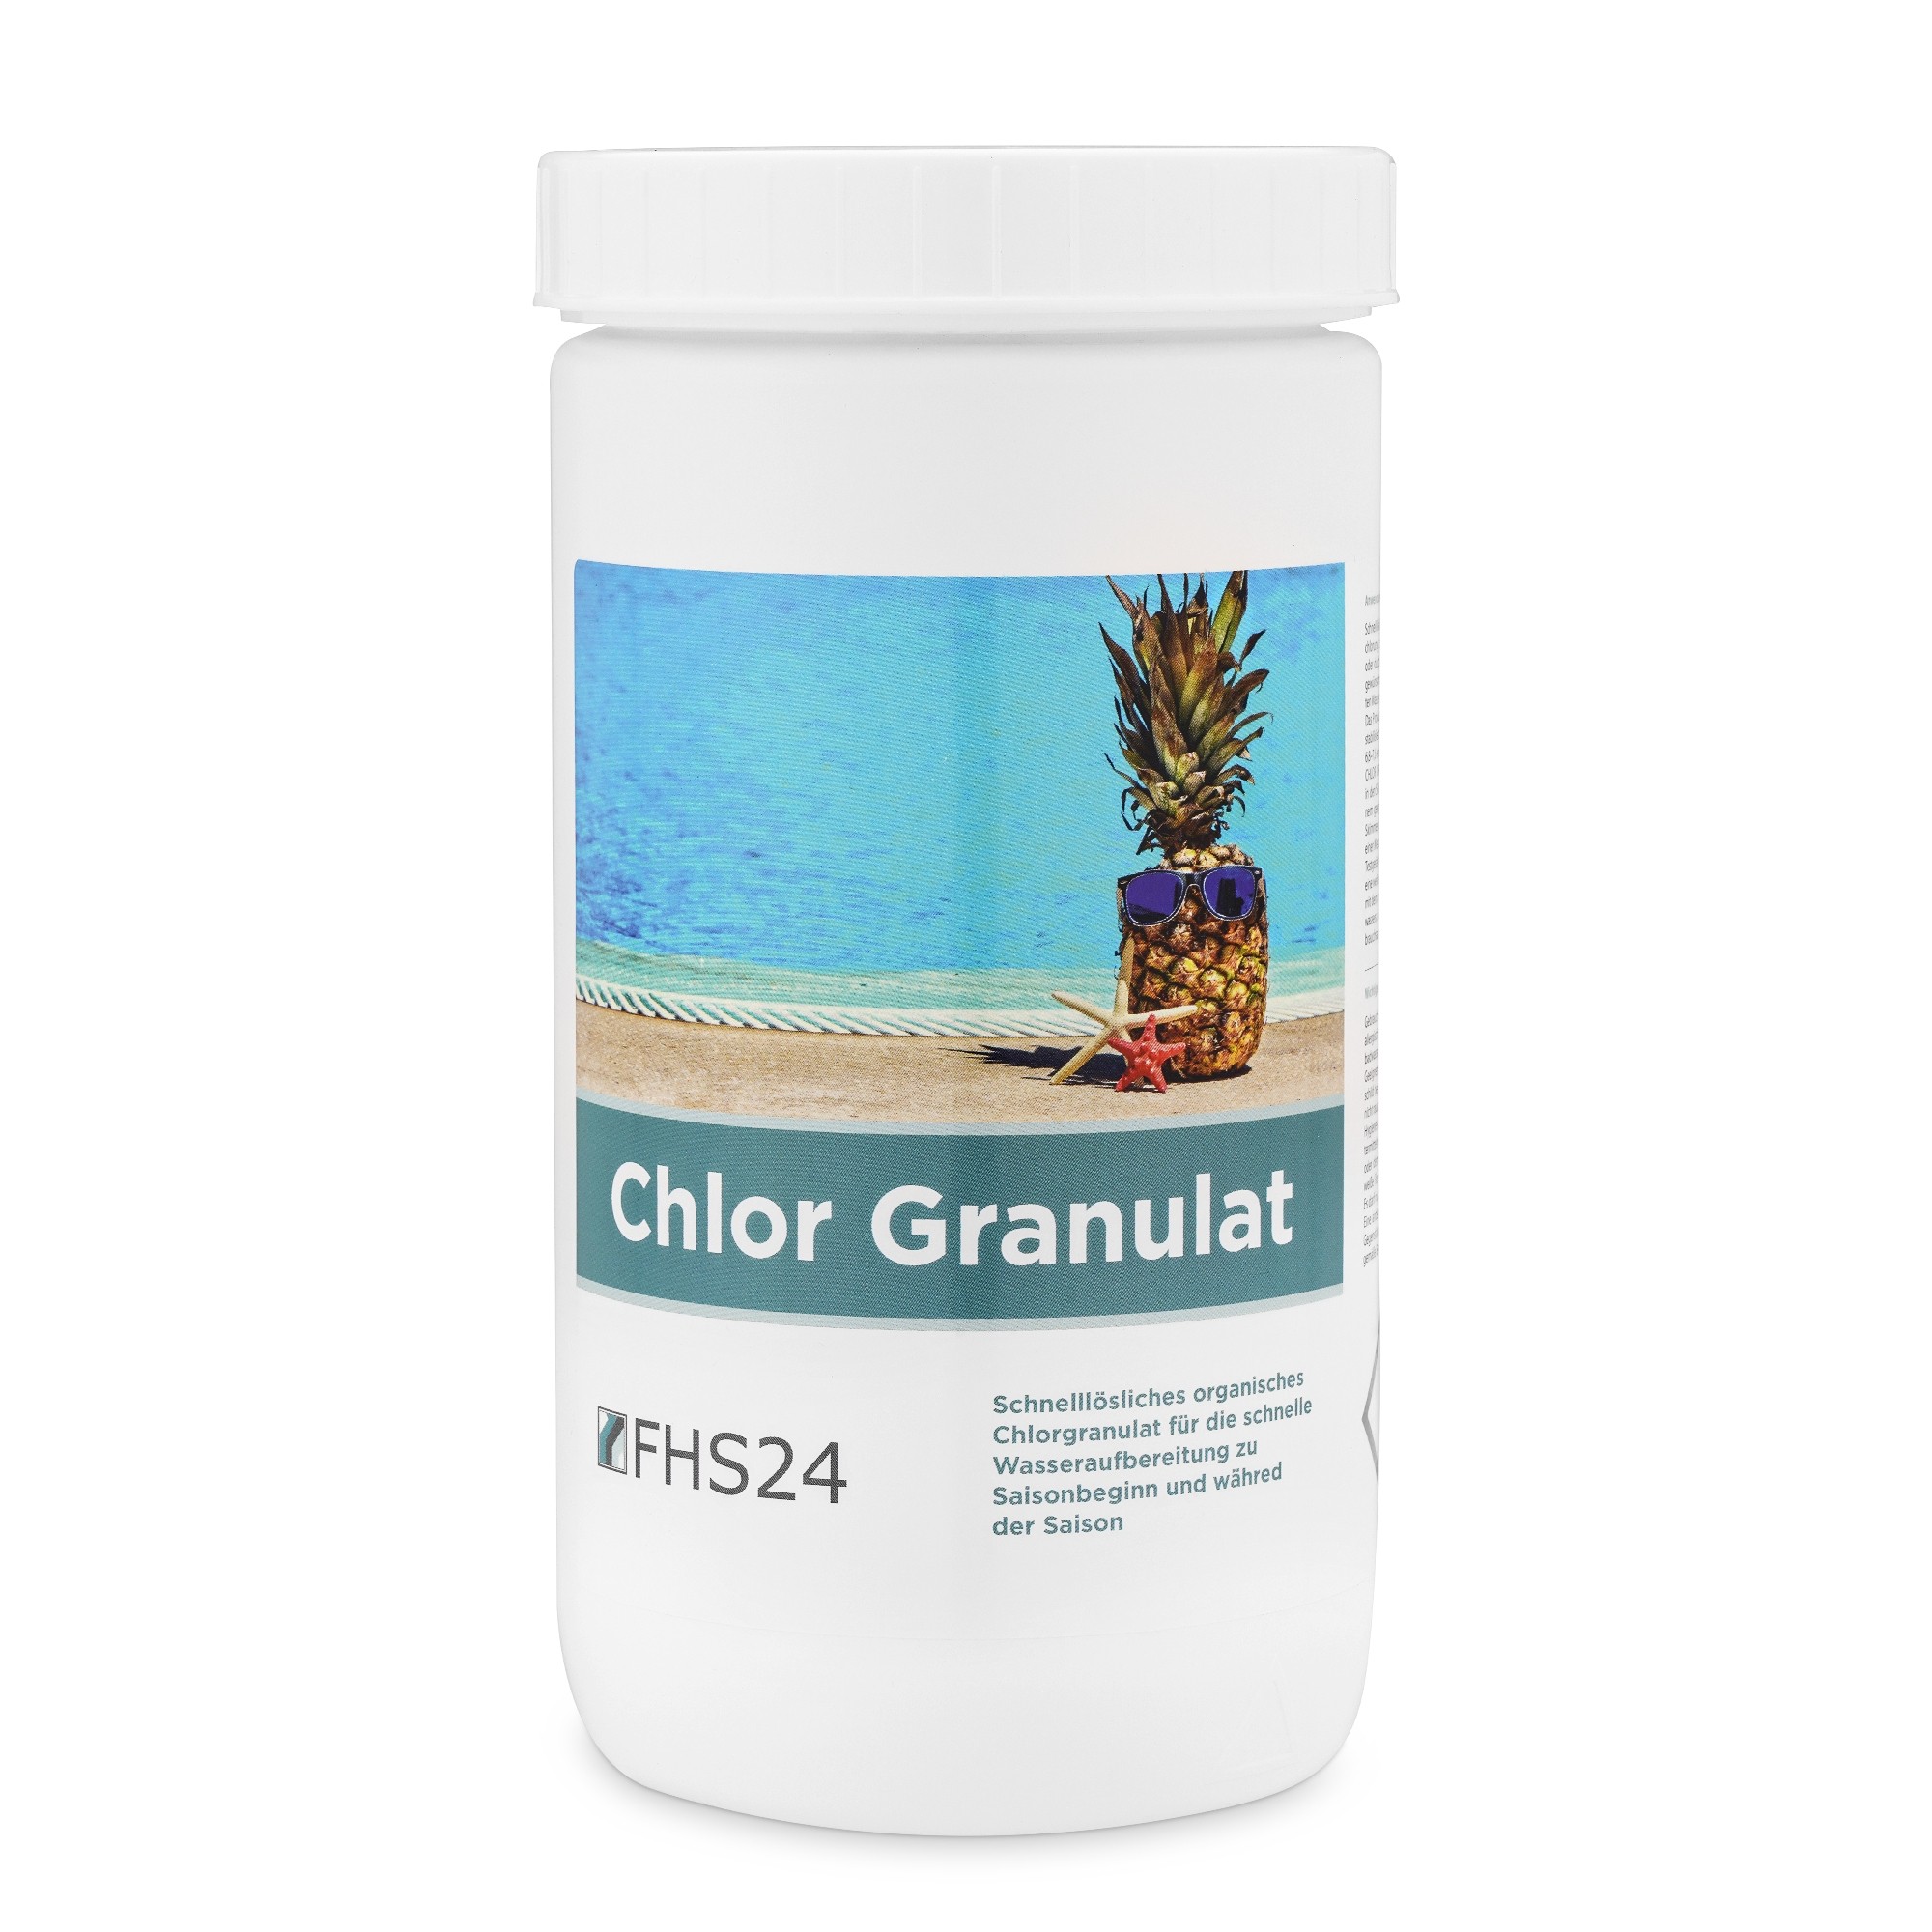 FHS24 Chlor Granulat 1kg schnelllöslich Chlorgranulat Desinfektion Chlorung Pool Wasserpflege Poolpflege